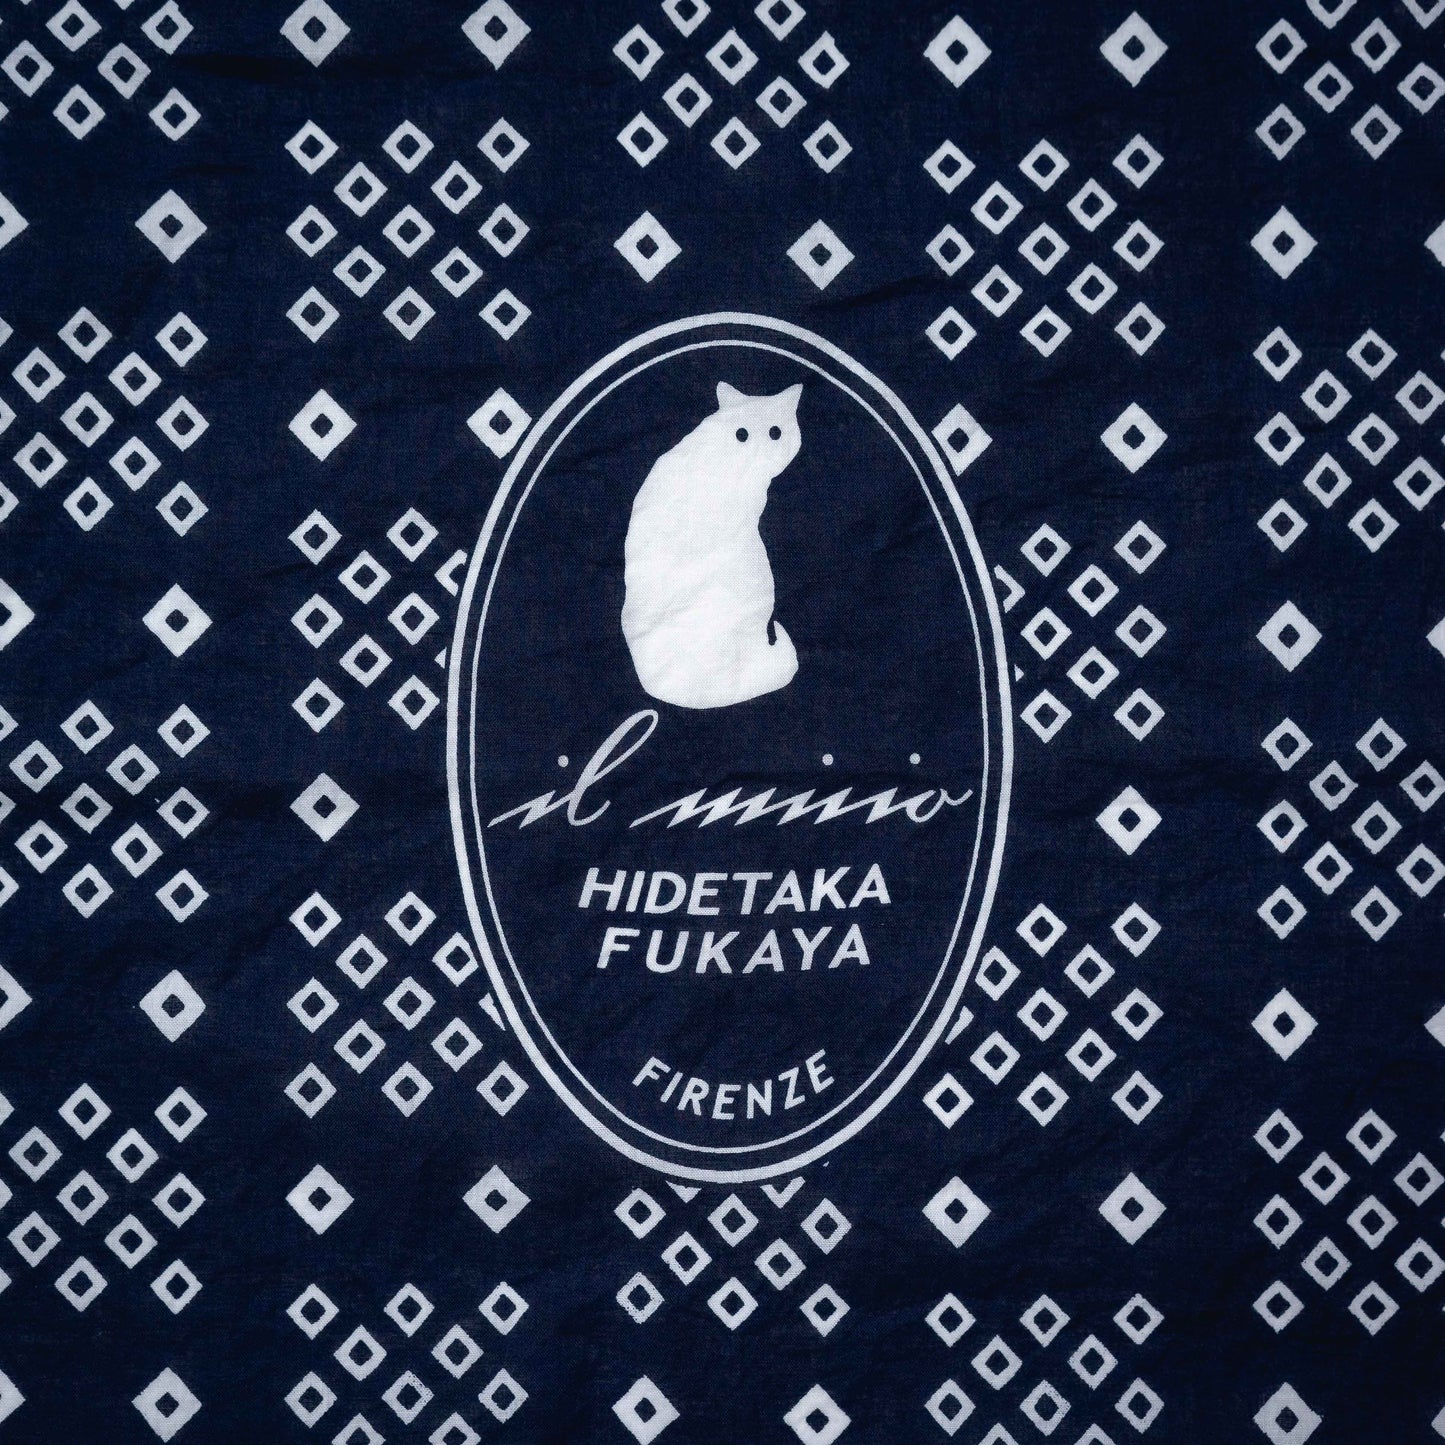 Il Micio Florence Luxury Fashion Brand Bandana Dot Navy Hidetaka Fukaya